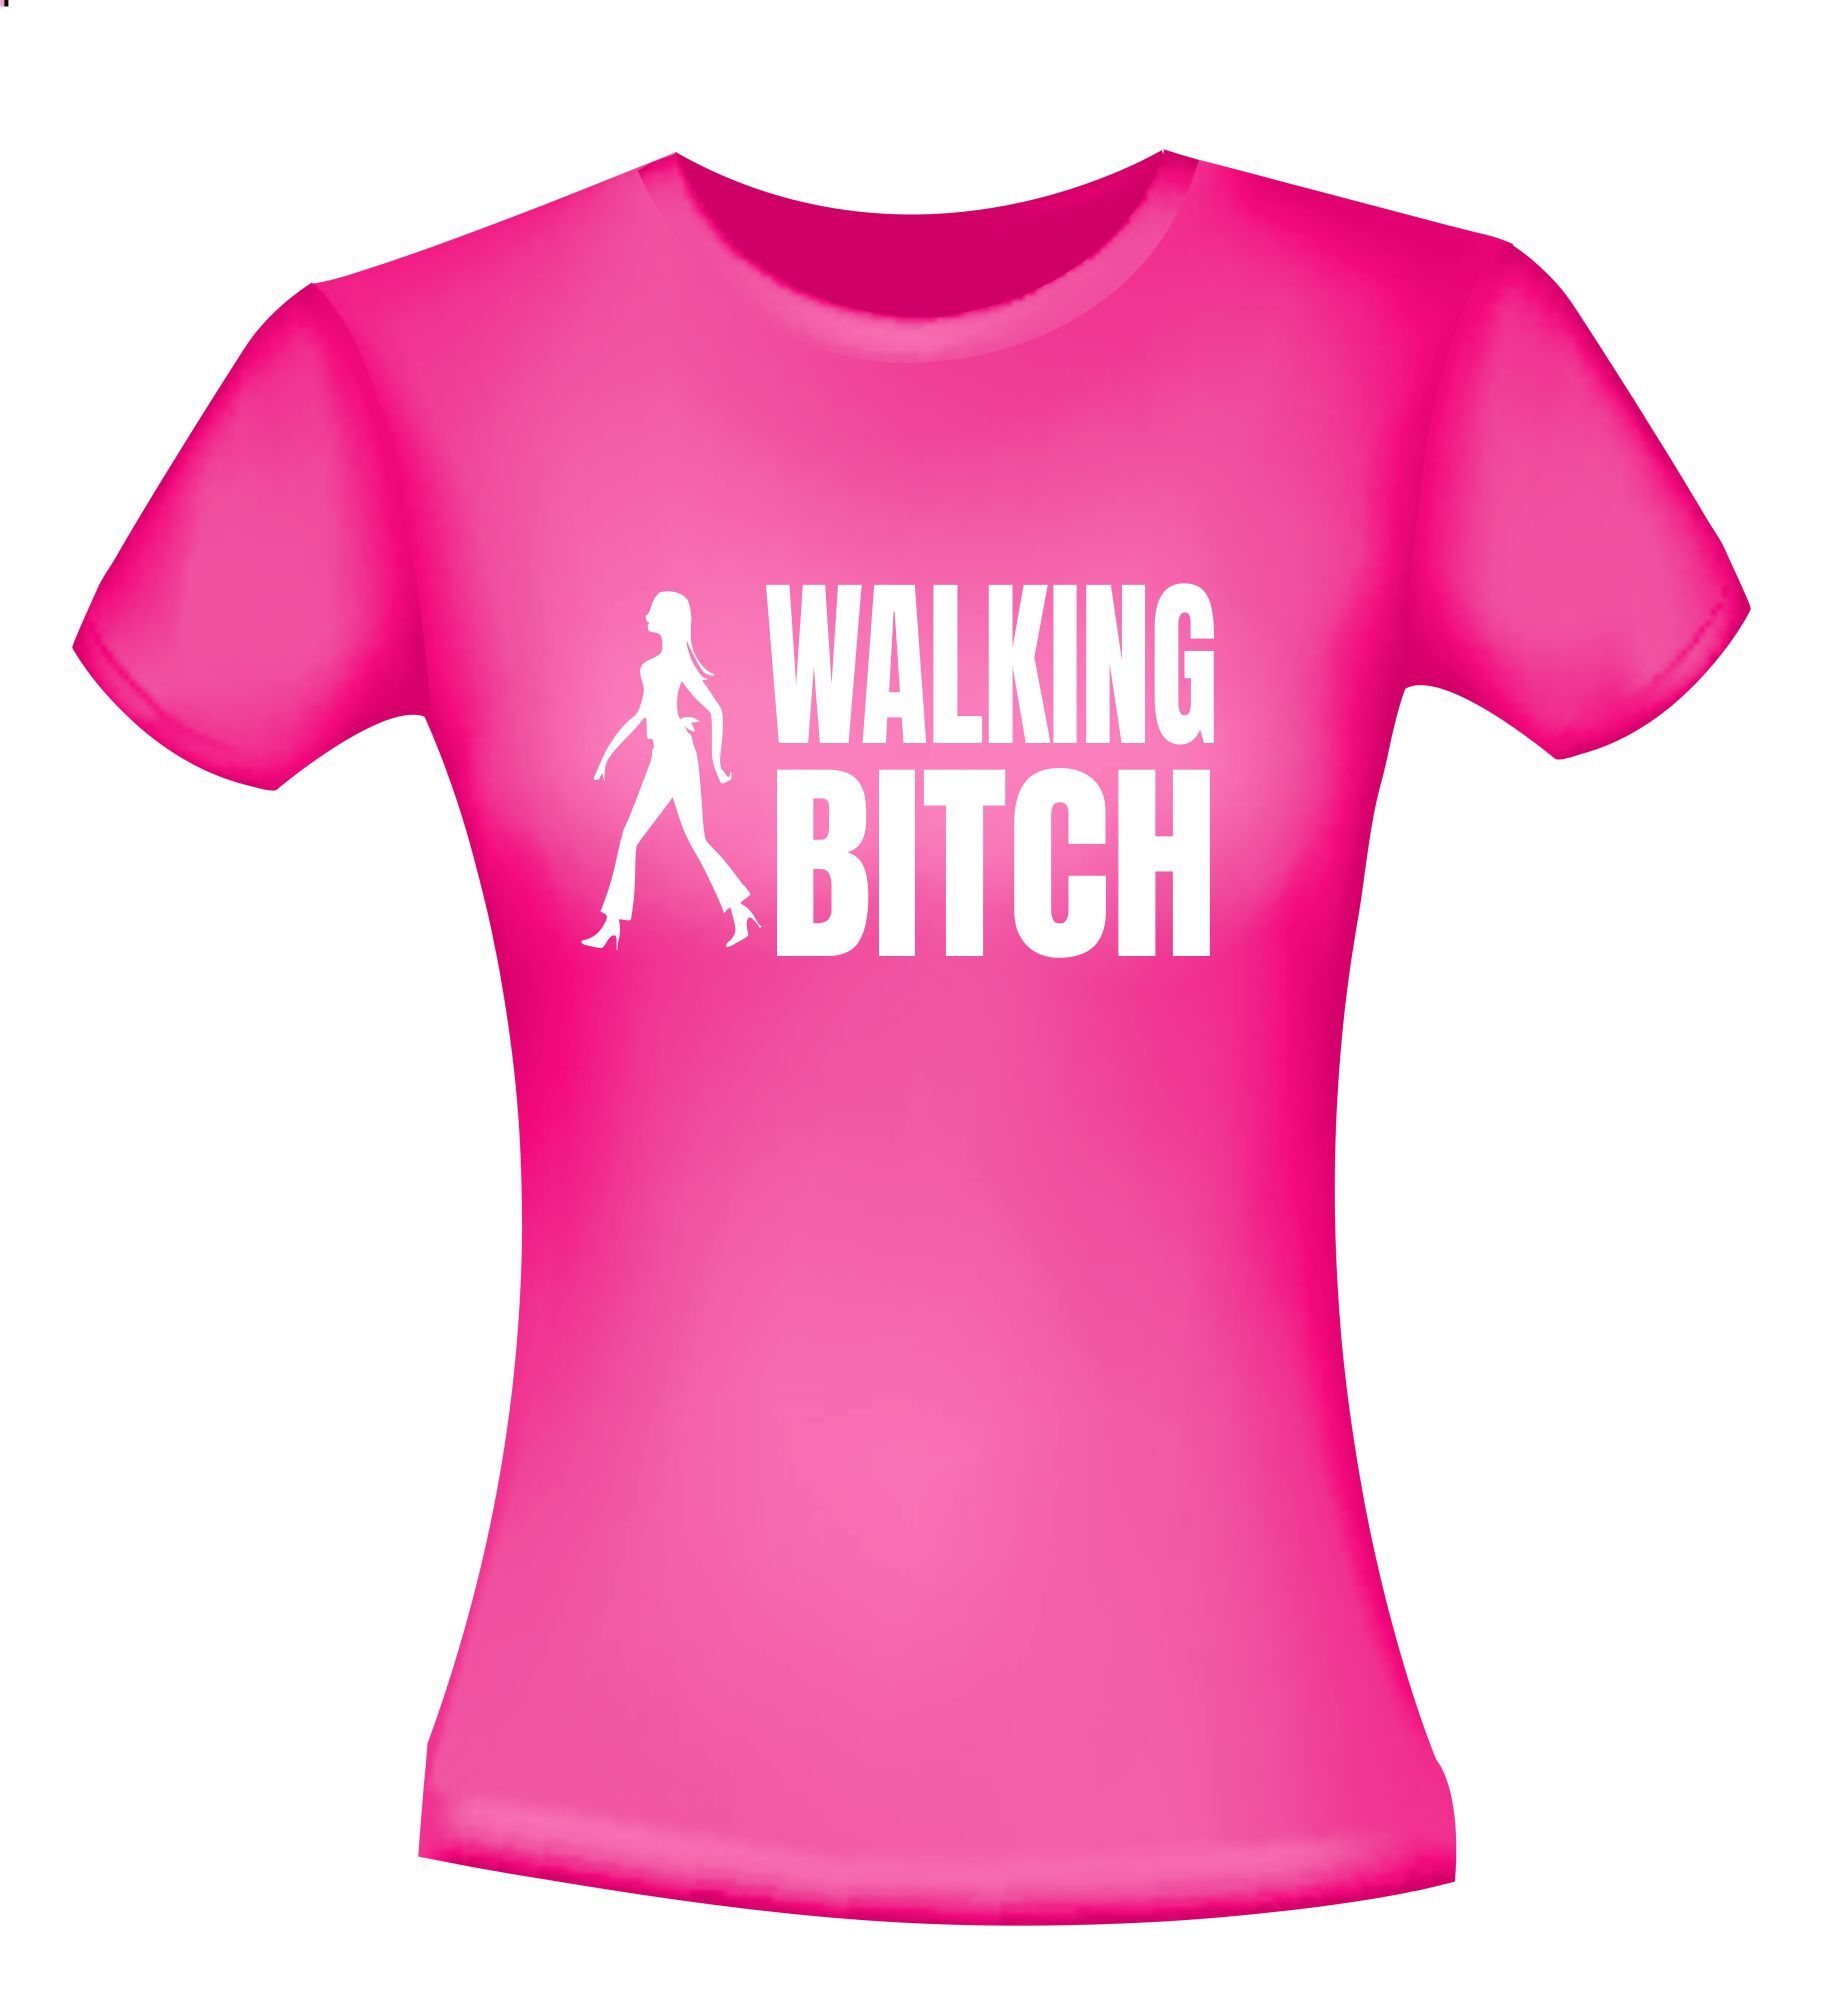 Shirtje vierdaagse walking bitch